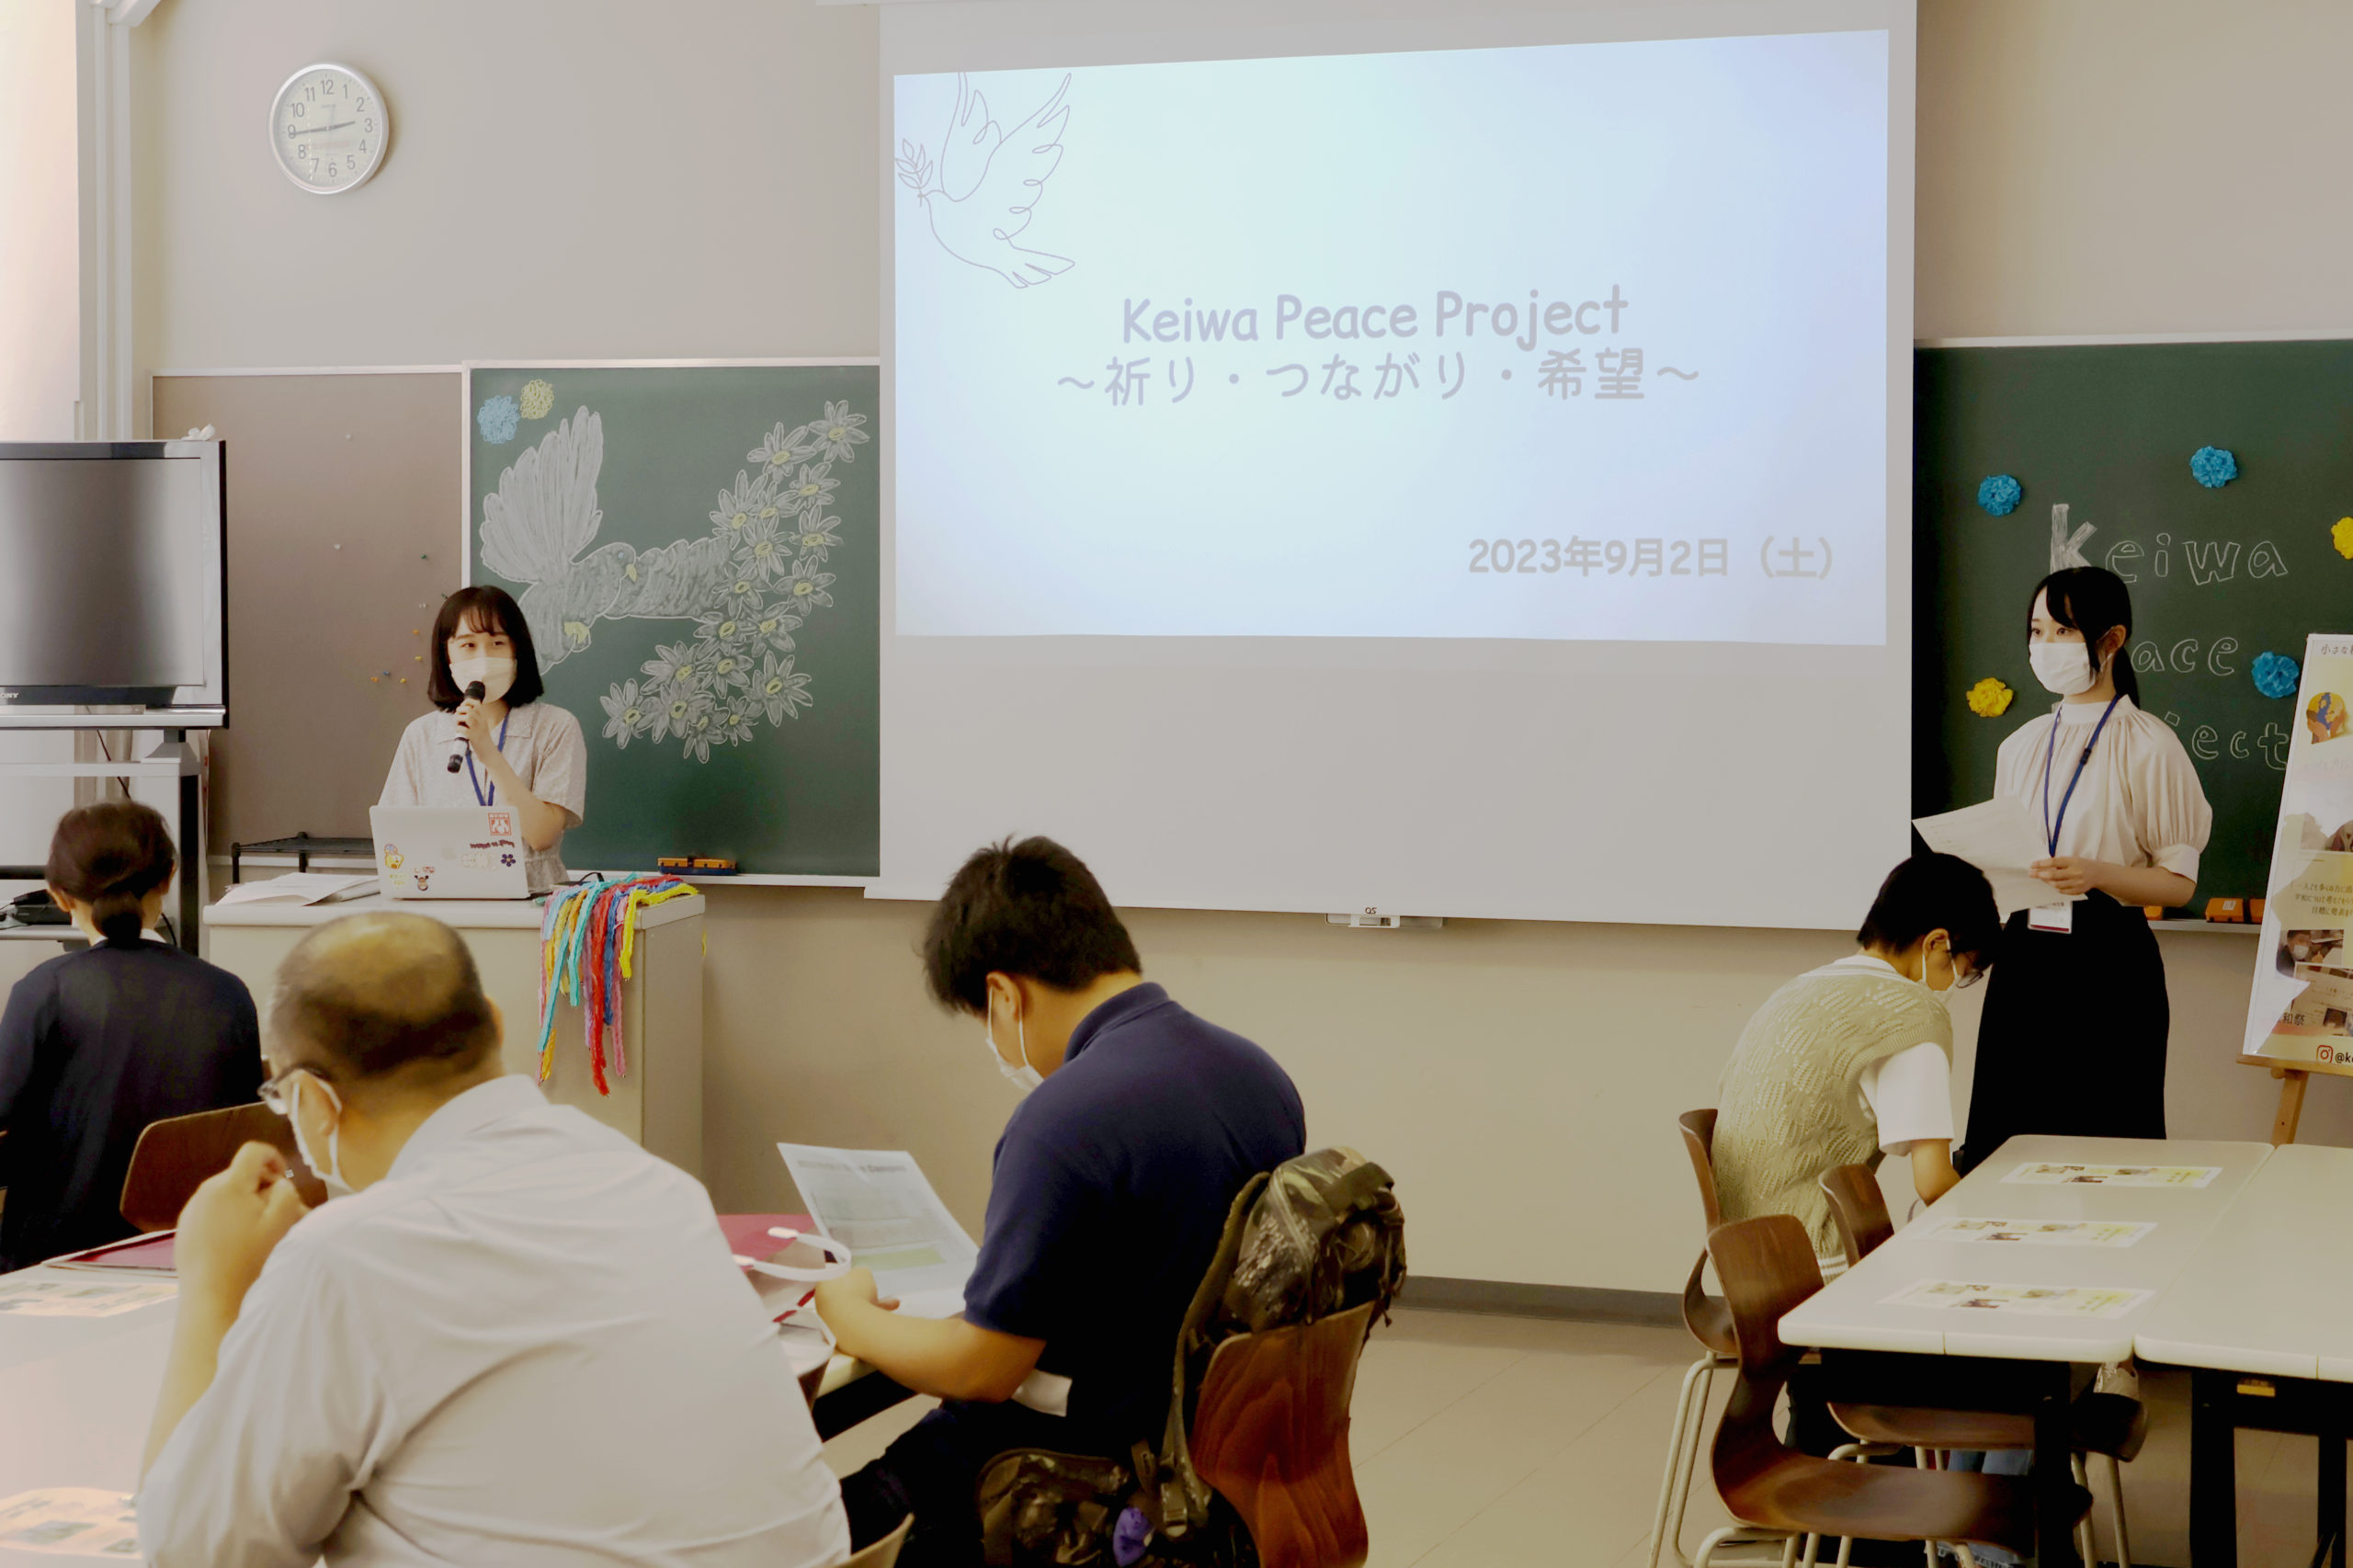 Keiwa Peace Project